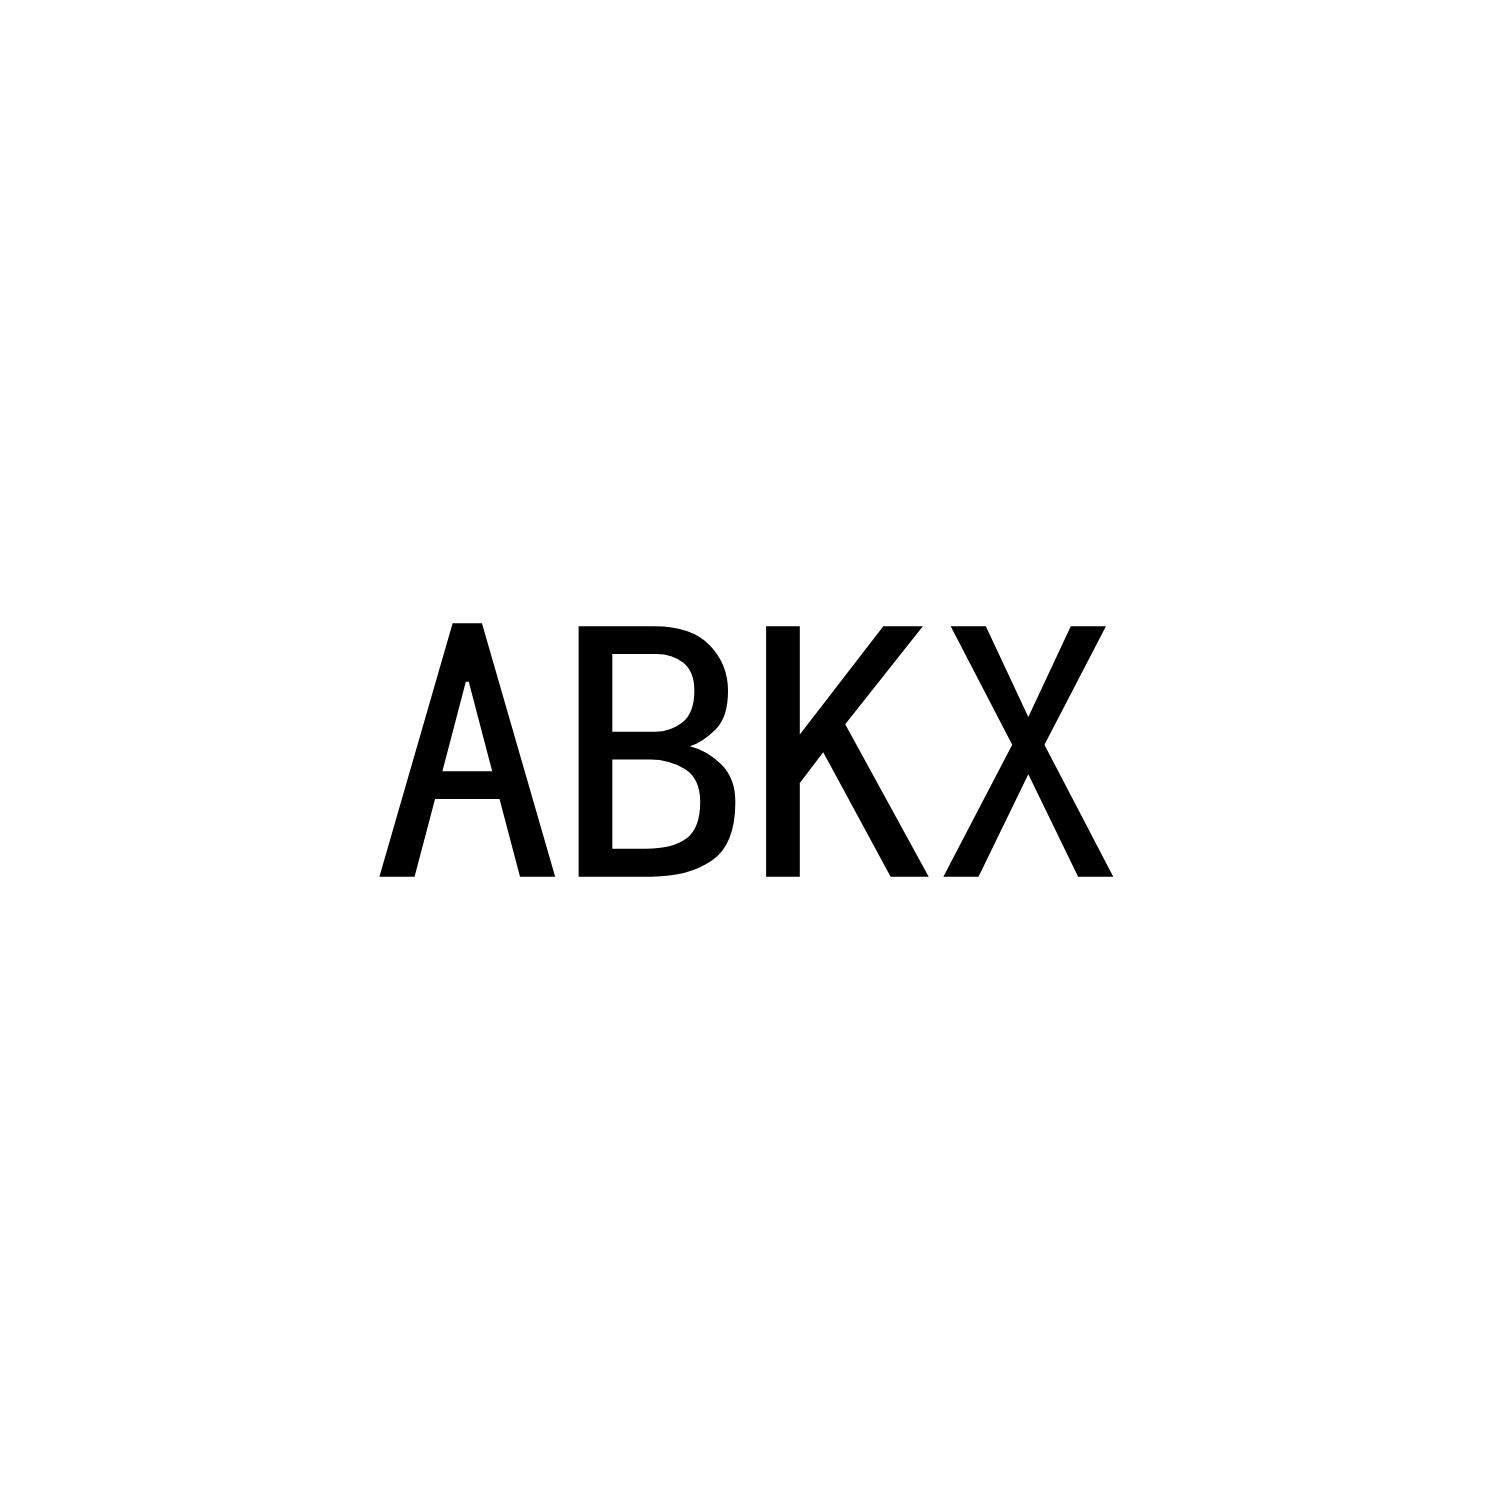 ABKX